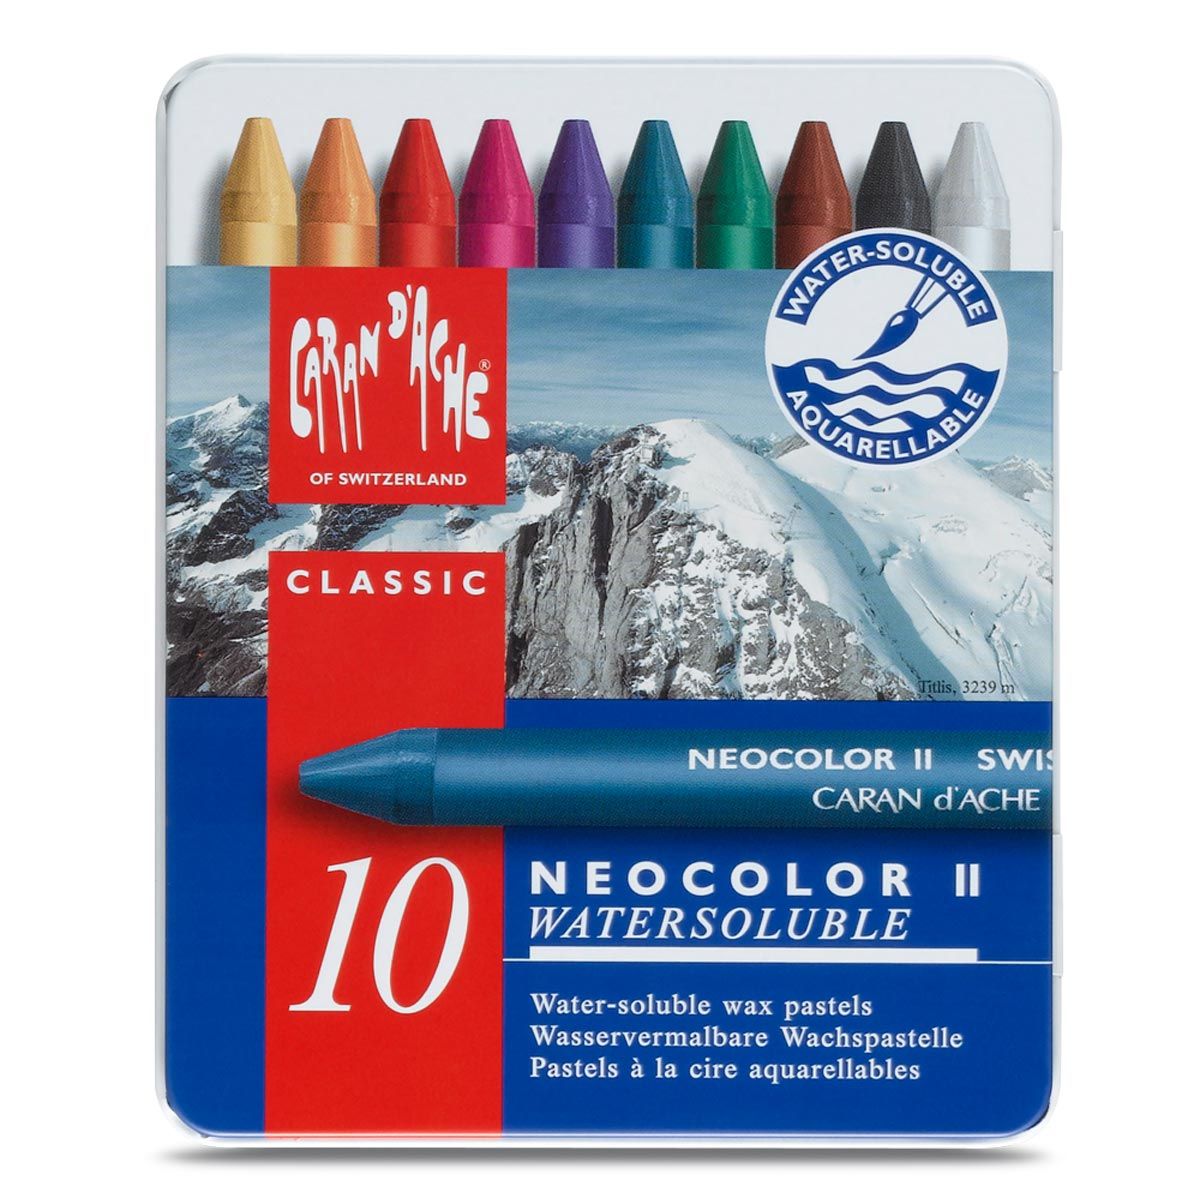 Caran d'Ache Neocolor II Water-Soluble Pastel Set of 10